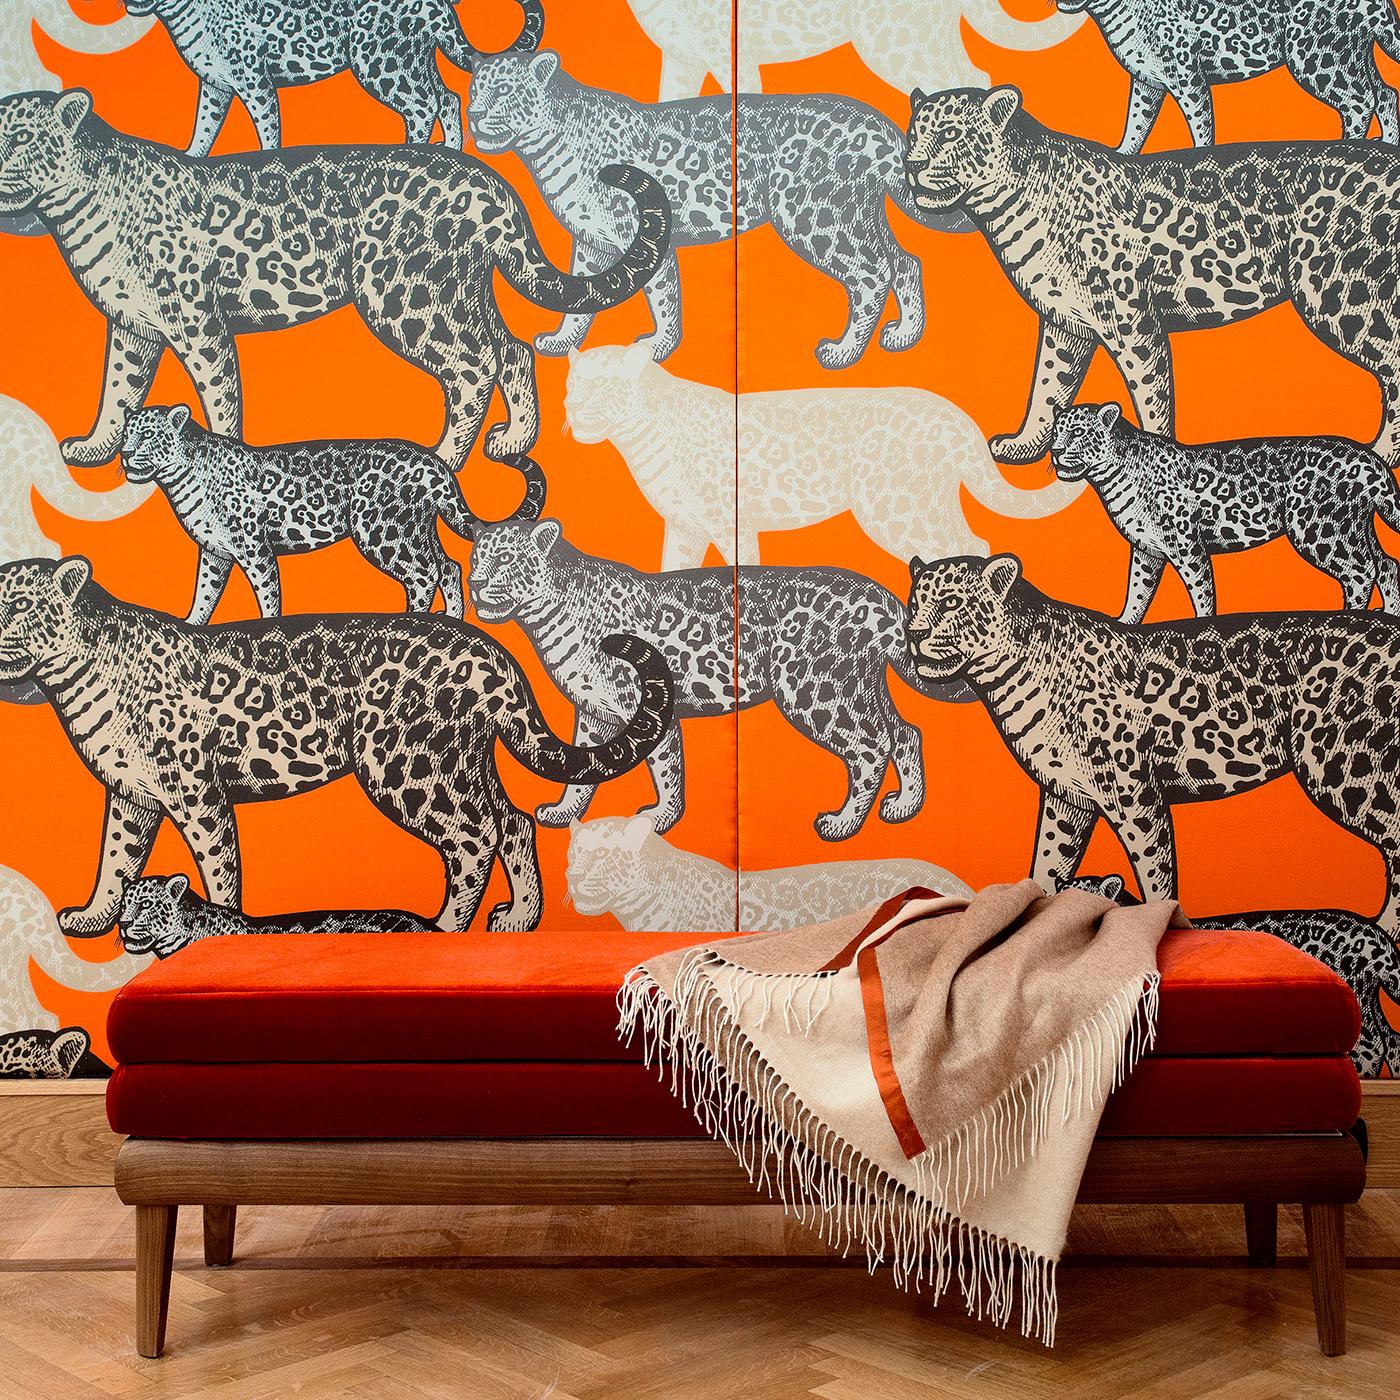 Walking Leopards Orange Paneel #1 (Moderne)